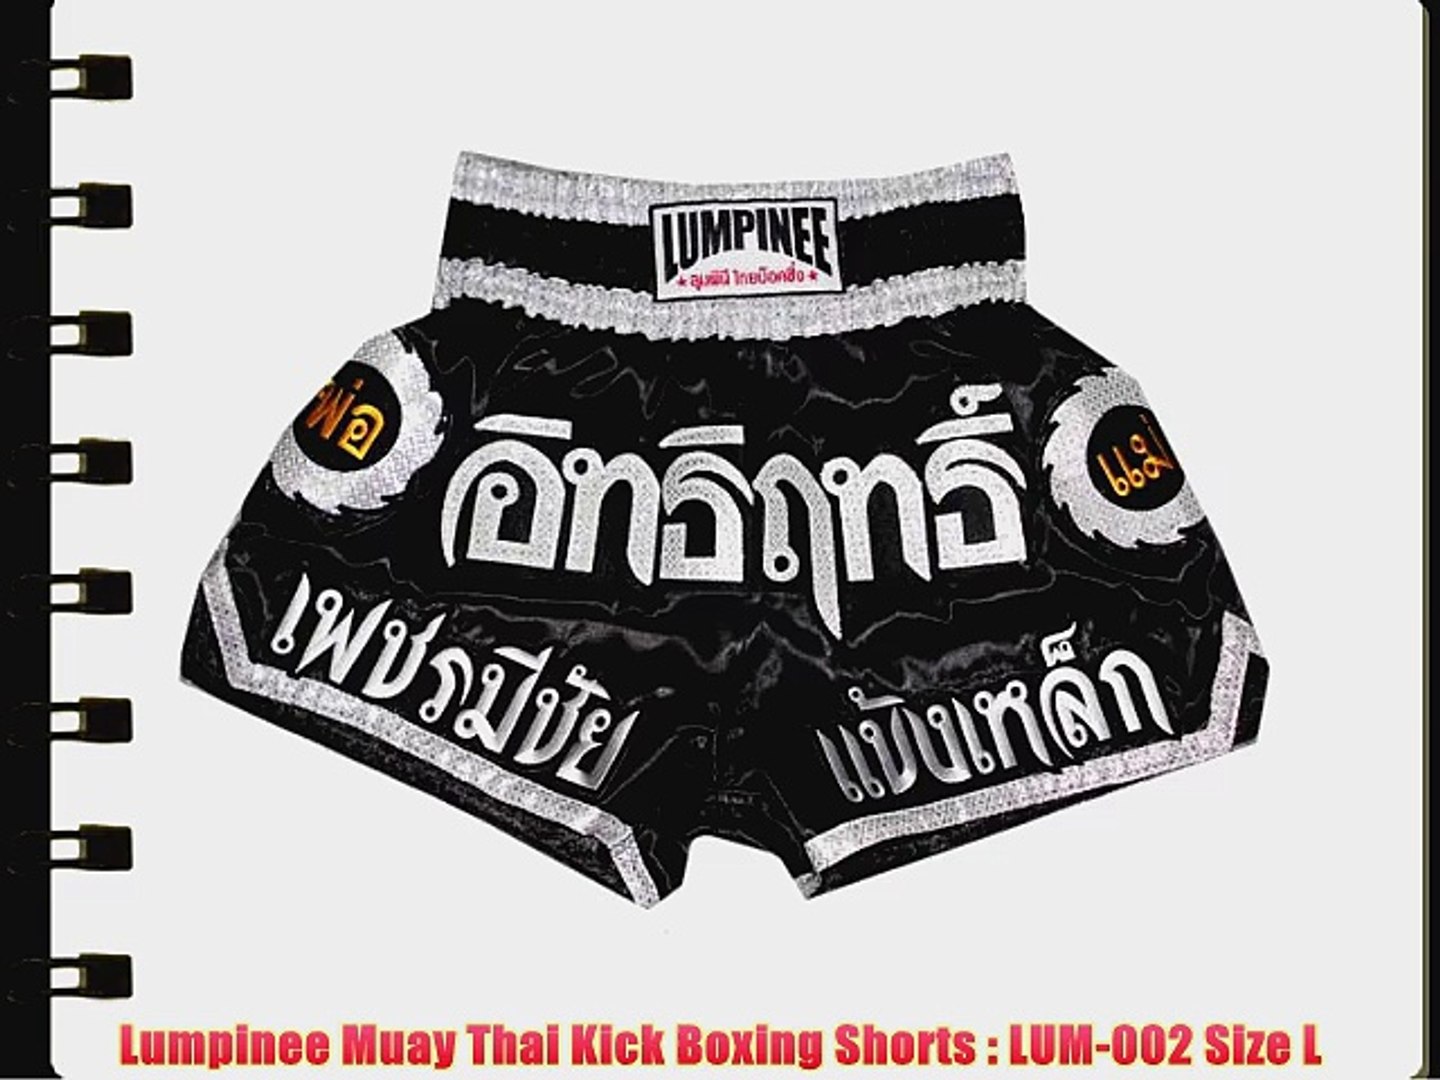 Lumpinee Muay Thai Kick Boxing Shorts LUM-022